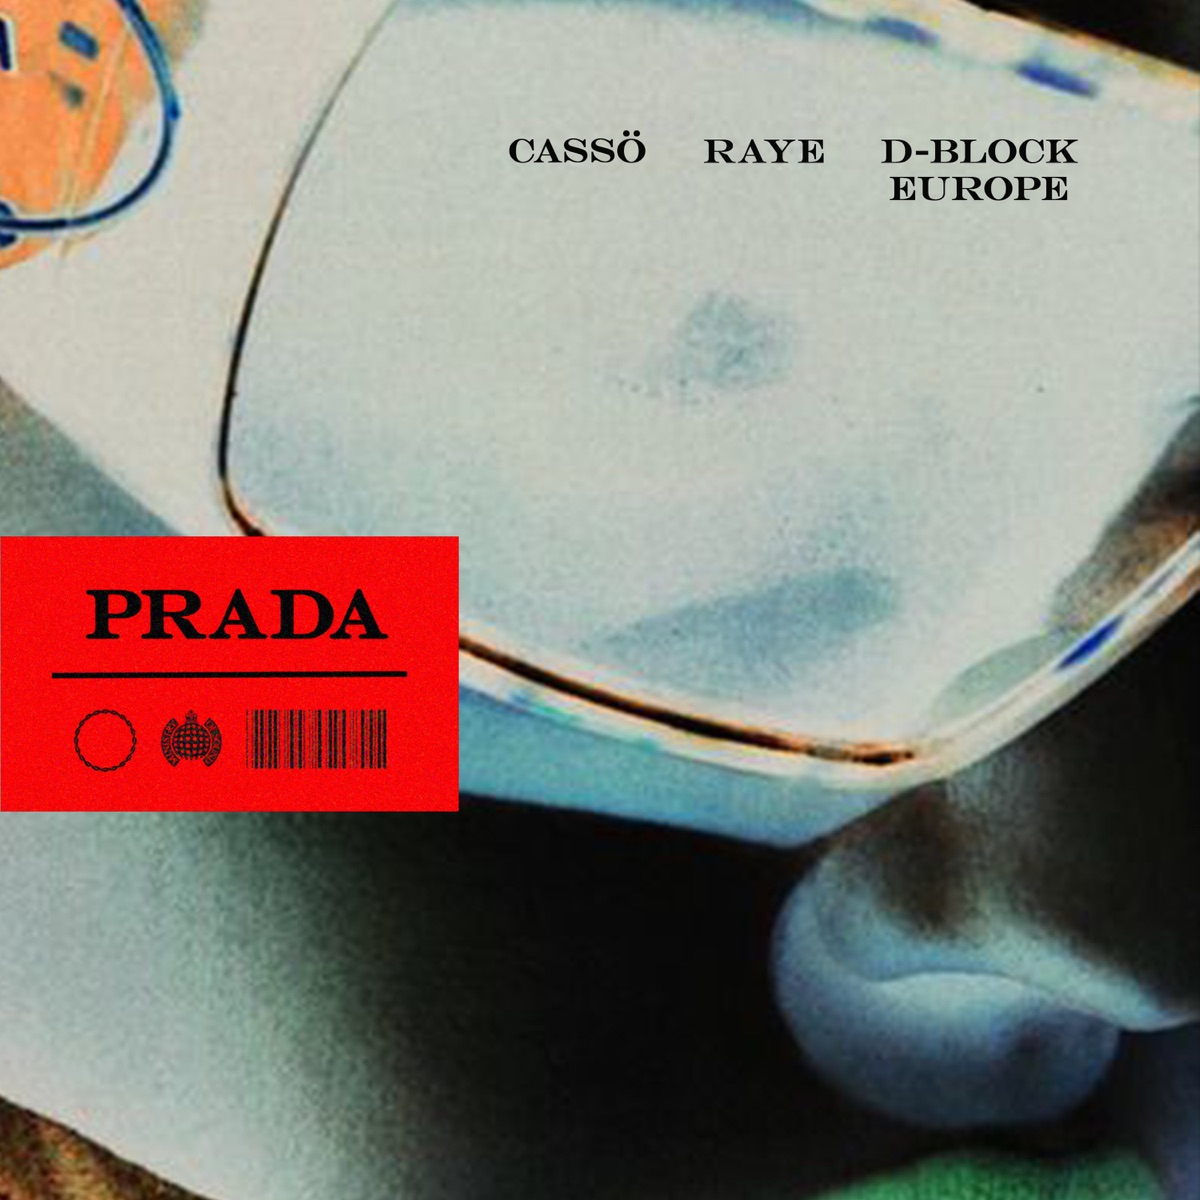 Prada - Single - Album by cassö, RAYE & D-Block Europe - Apple Music